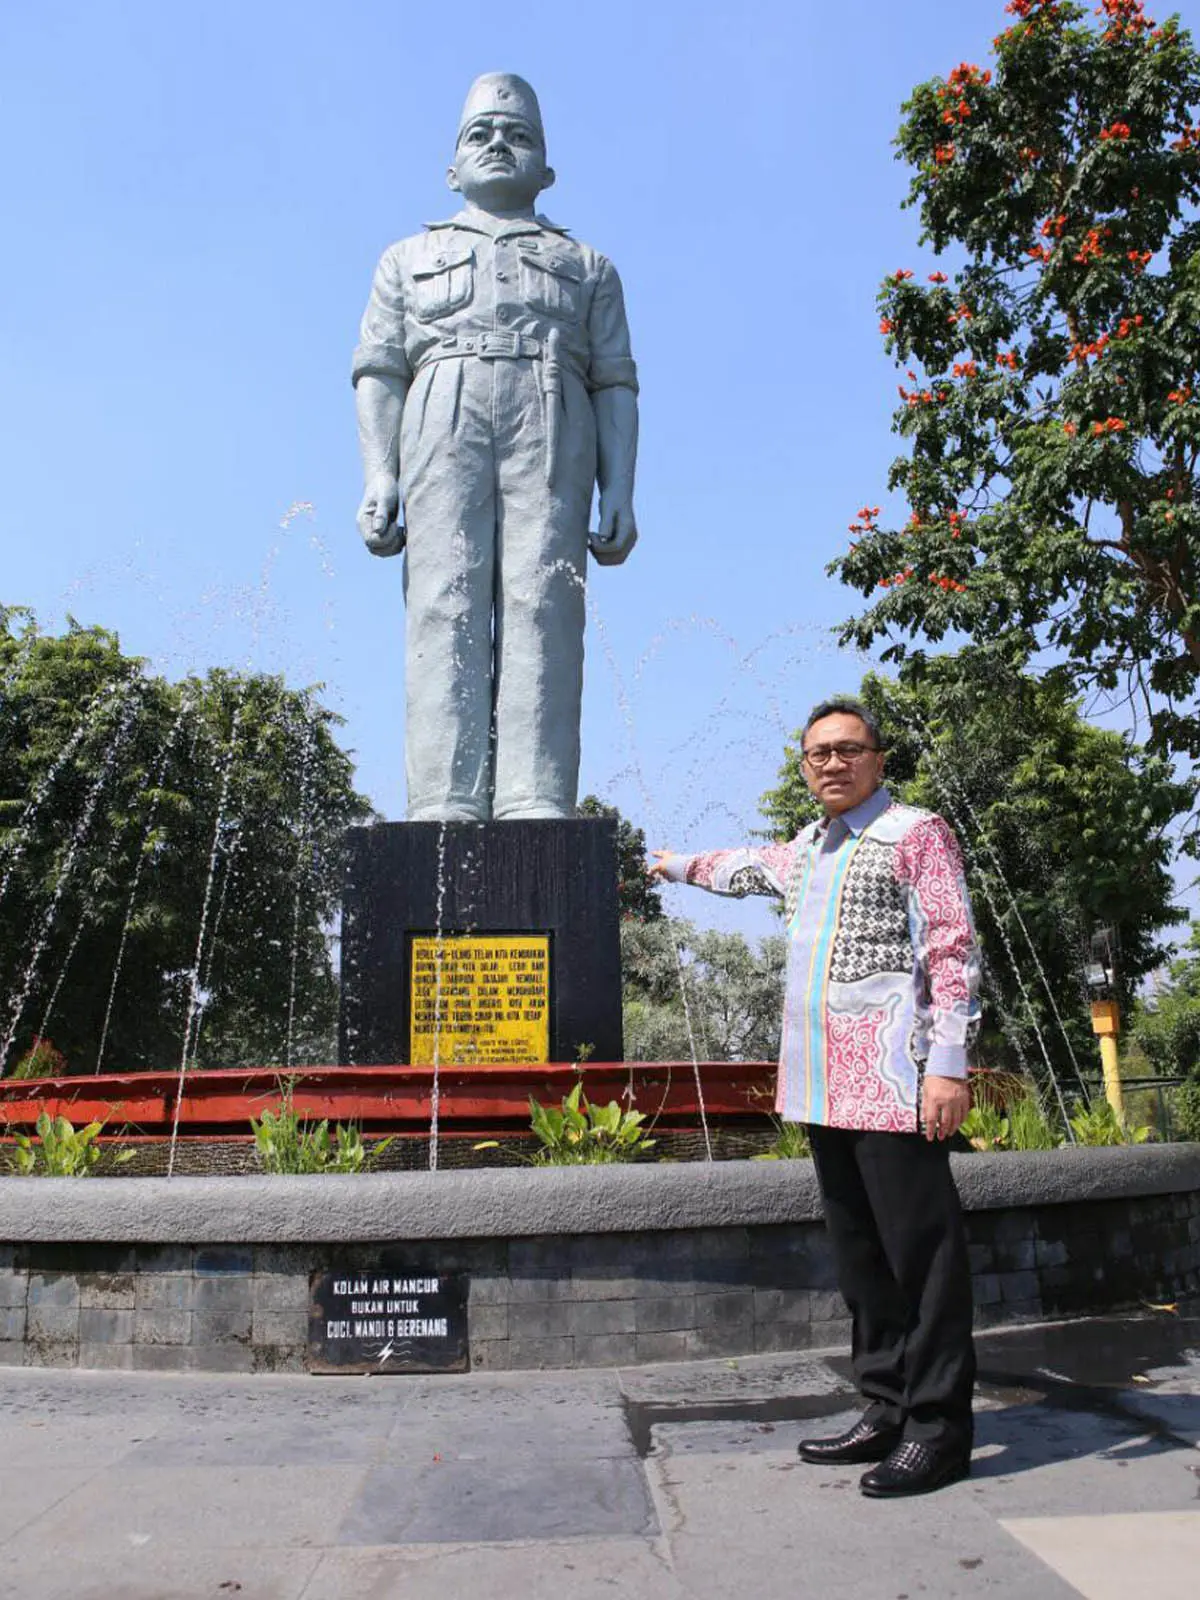 Ketua MPR menyebut monumen Suryo adalah bukti yang akan terus mengingatkan pentingnya bangsa Indonesia waspada terhadap komunisme.